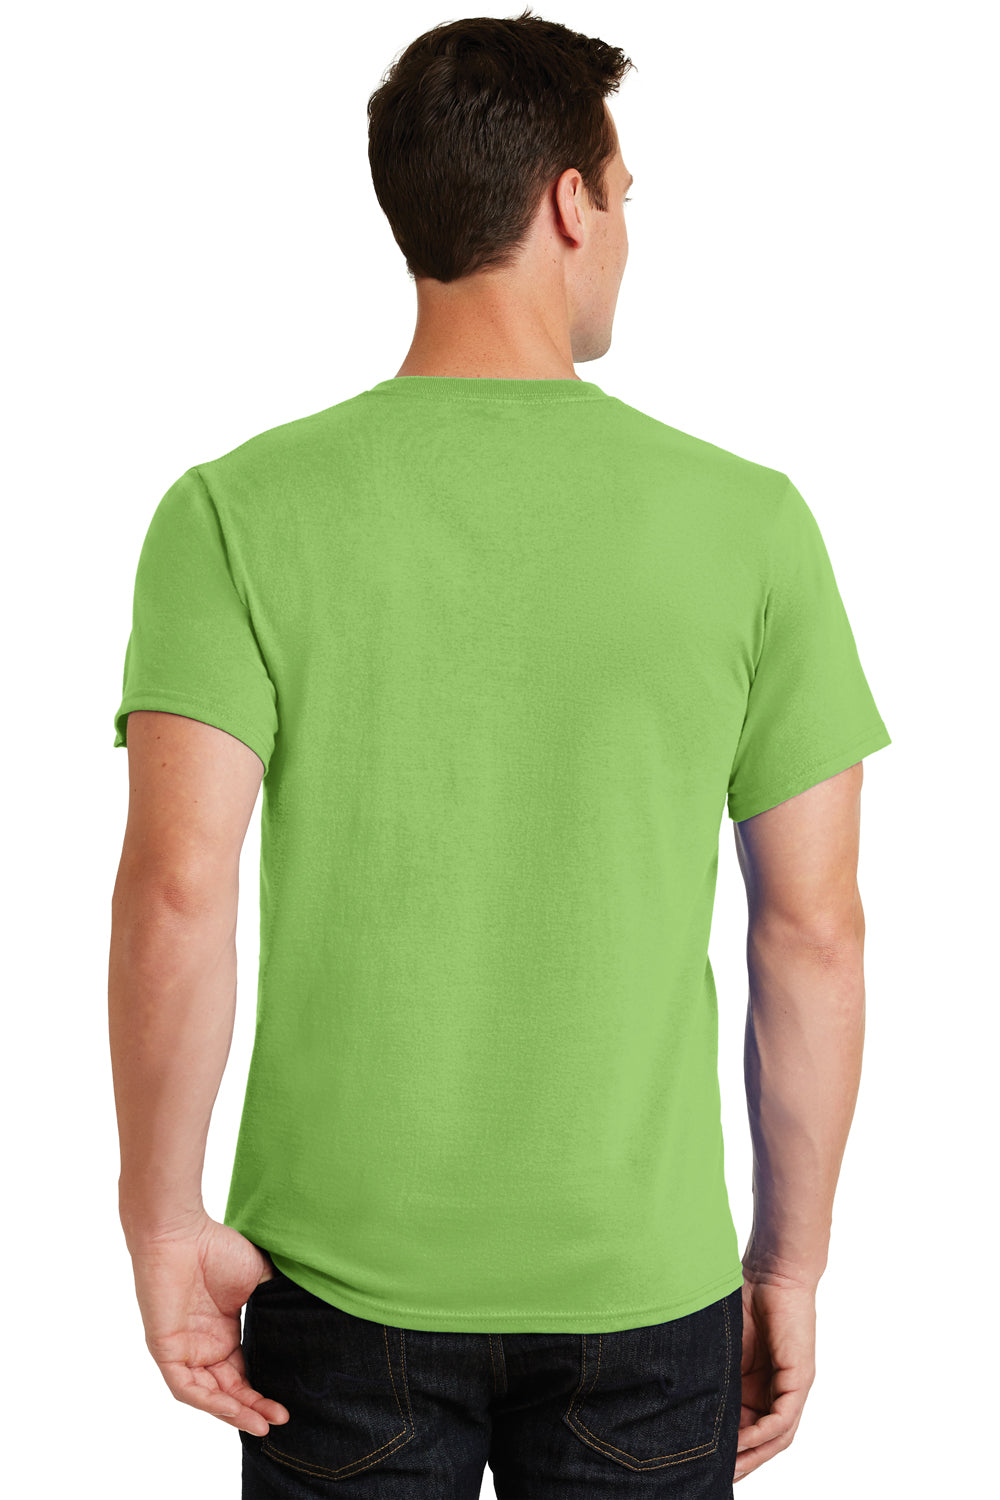 Port & Company PC61 Mens Essential Short Sleeve Crewneck T-Shirt Lime Green Back